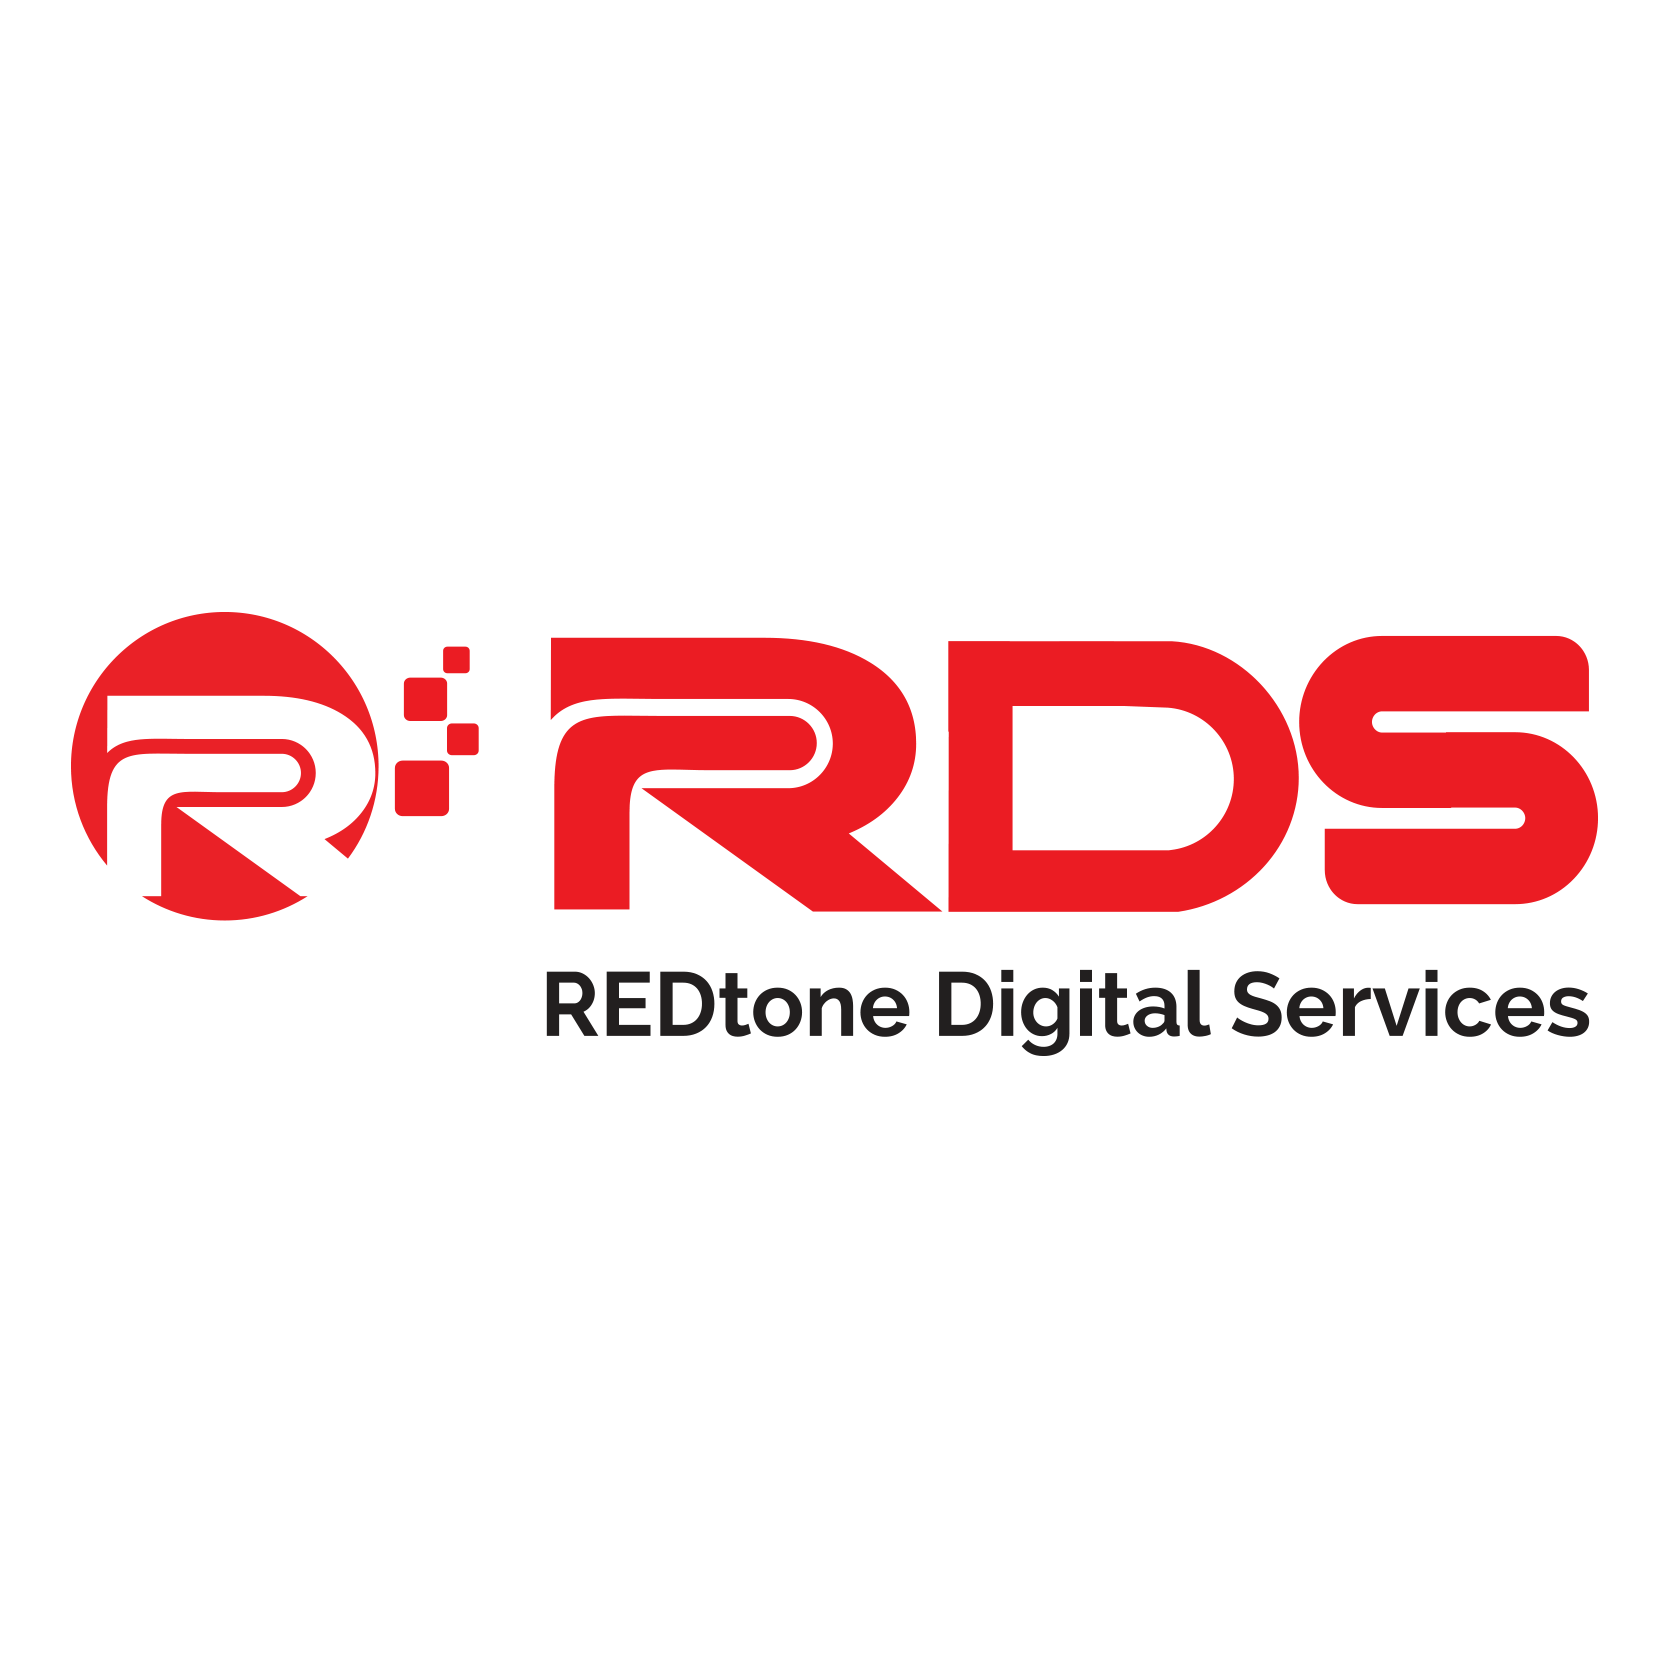 REDtone Digital Services